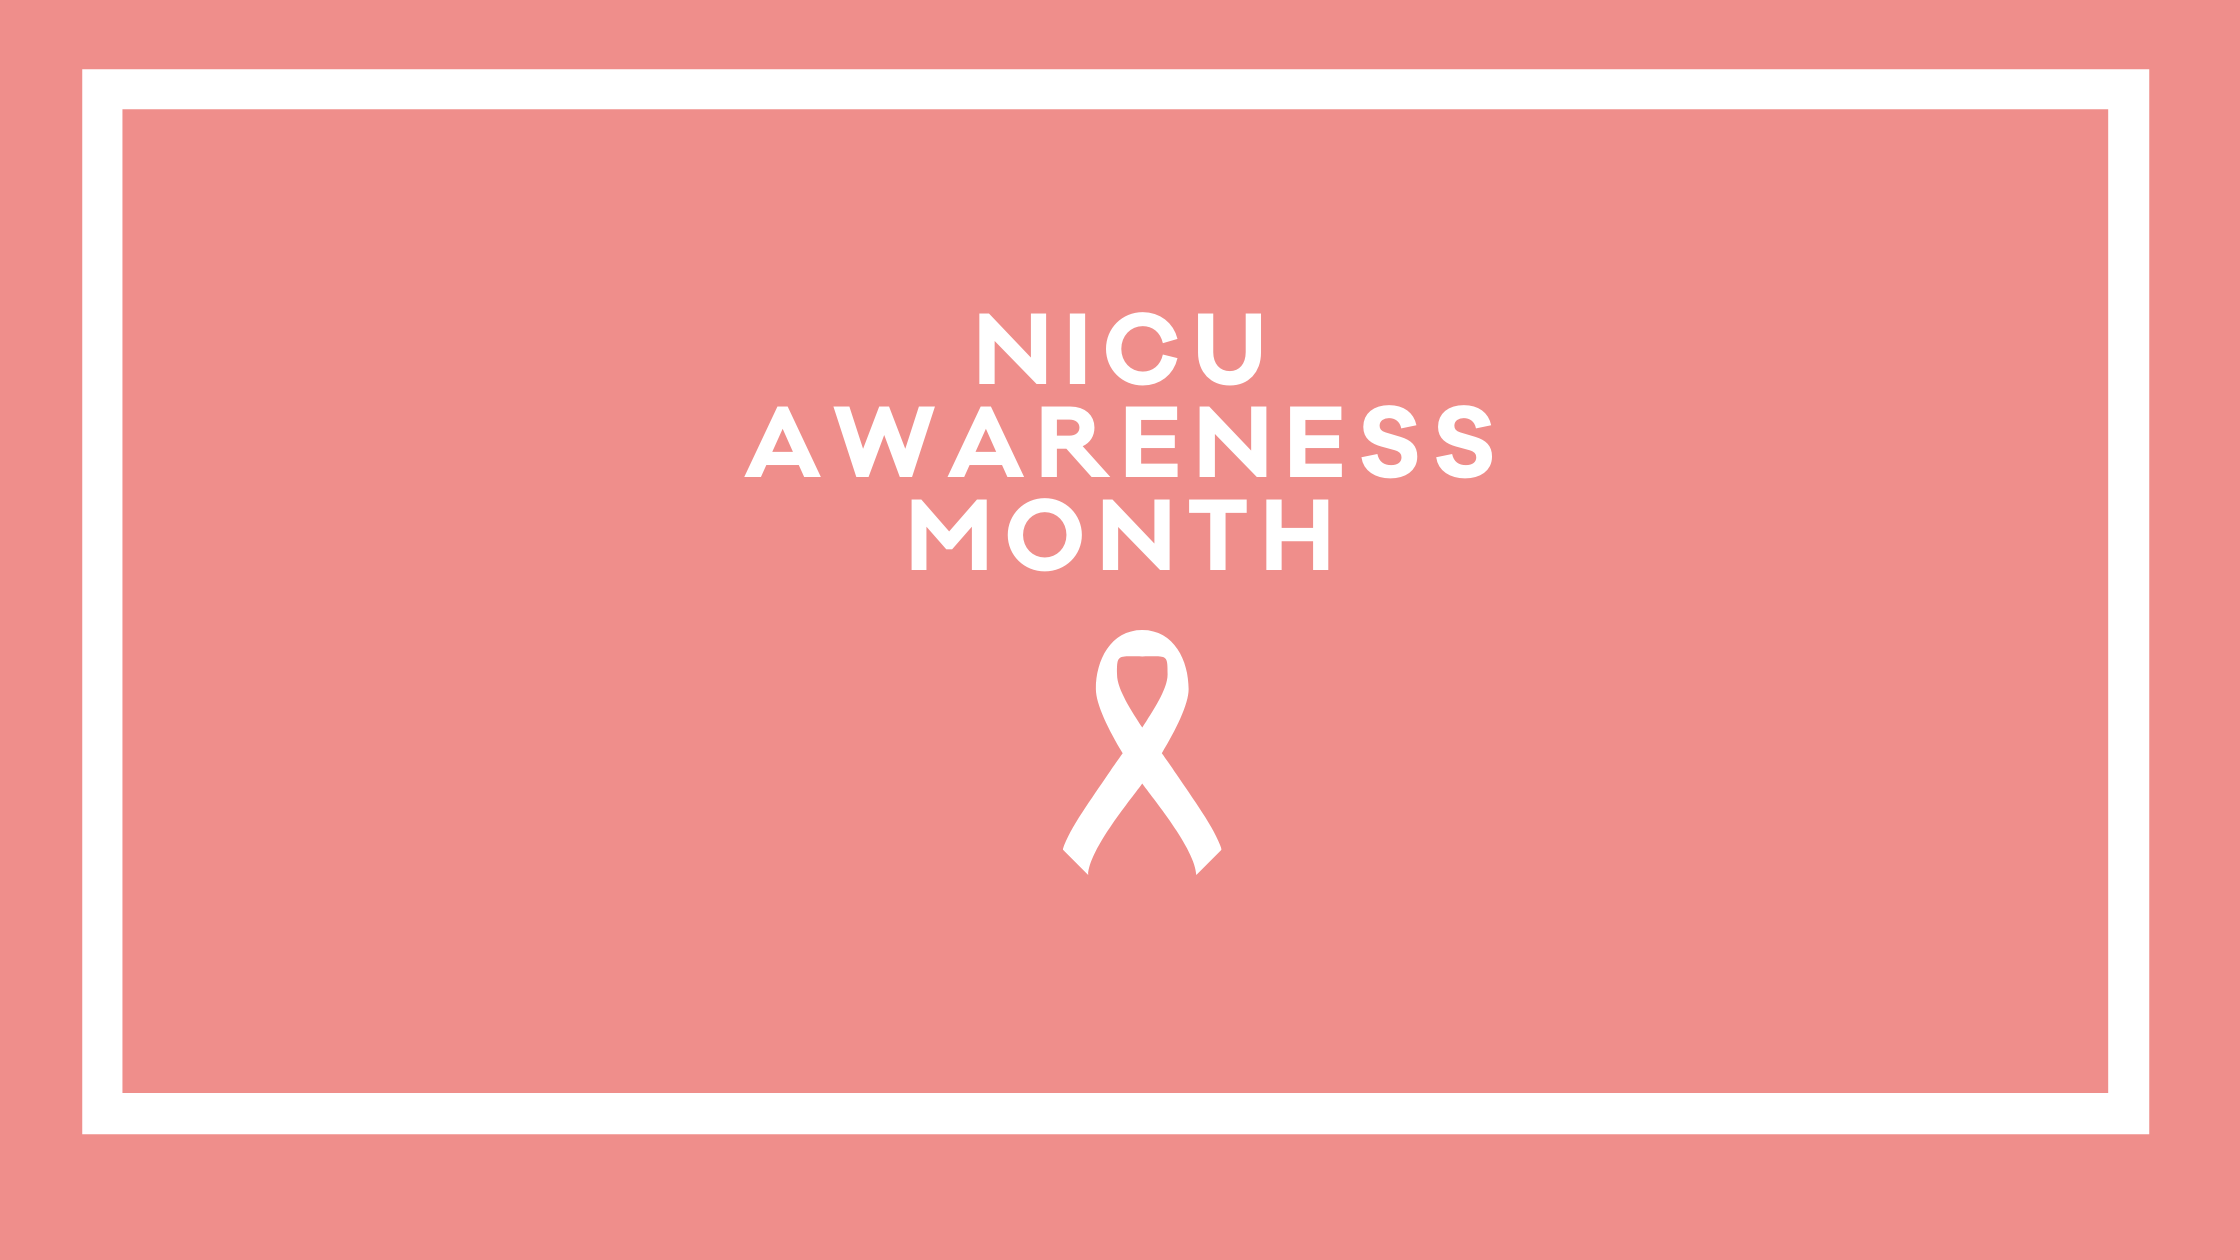 NICU Awareness Month Graphic